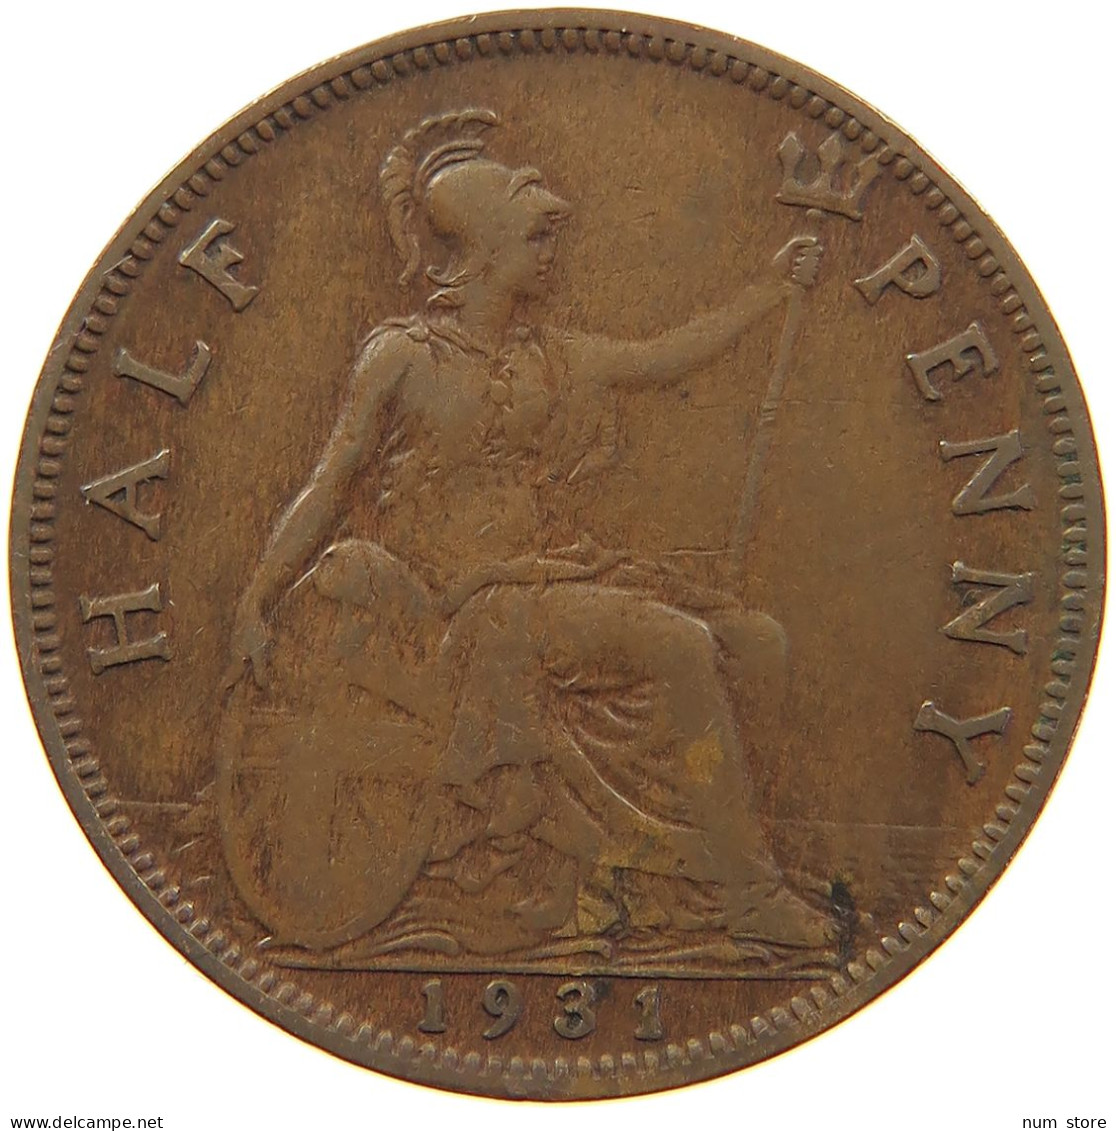 GREAT BRITAIN HALFPENNY 1931 #s028 0407 - C. 1/2 Penny